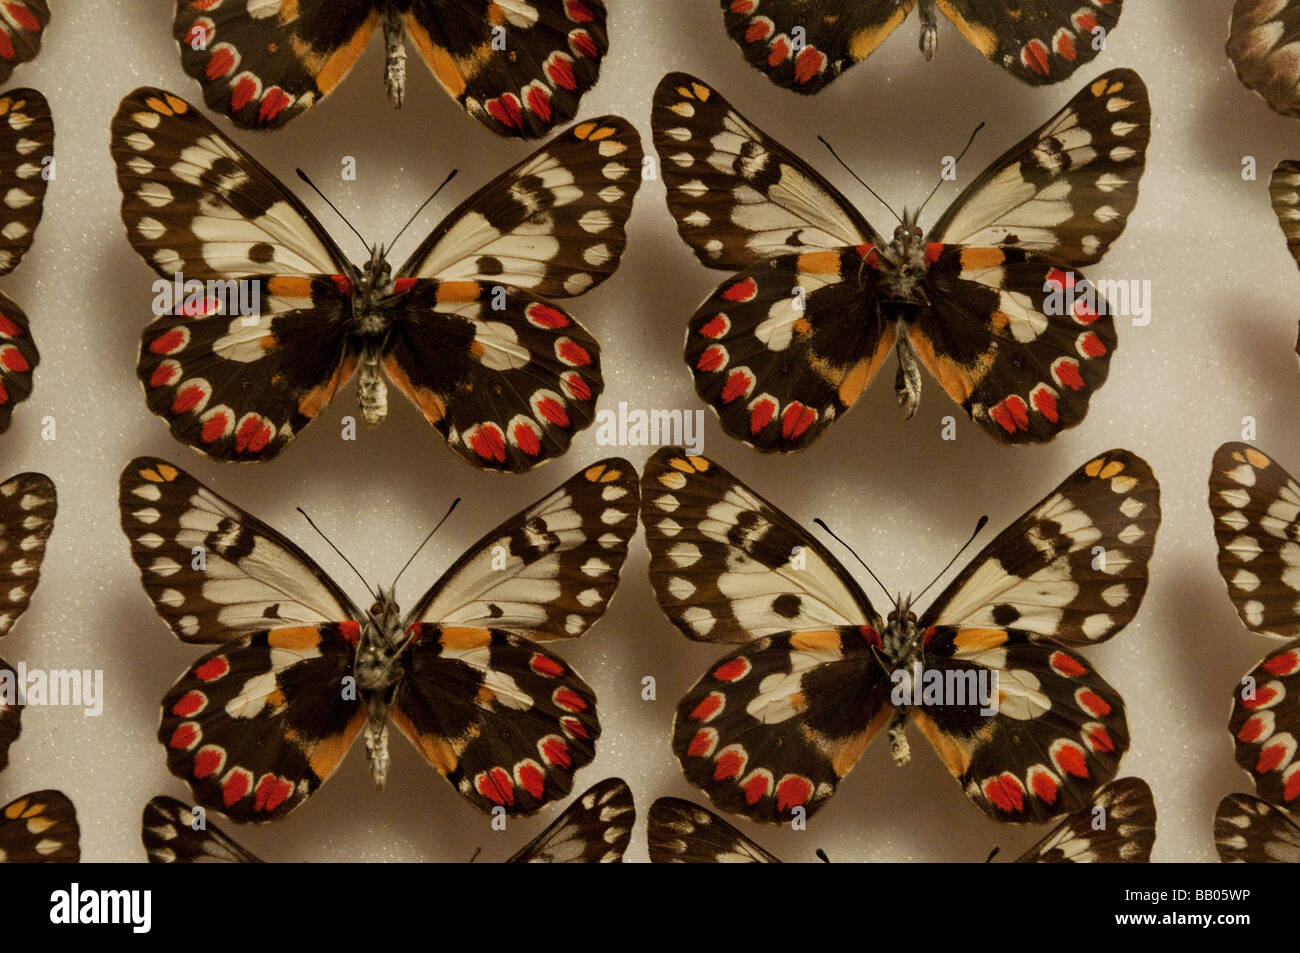 Ähnlich wie Schmetterlinge Melbourne Museum Melbourne Victoria Australia Stockfoto